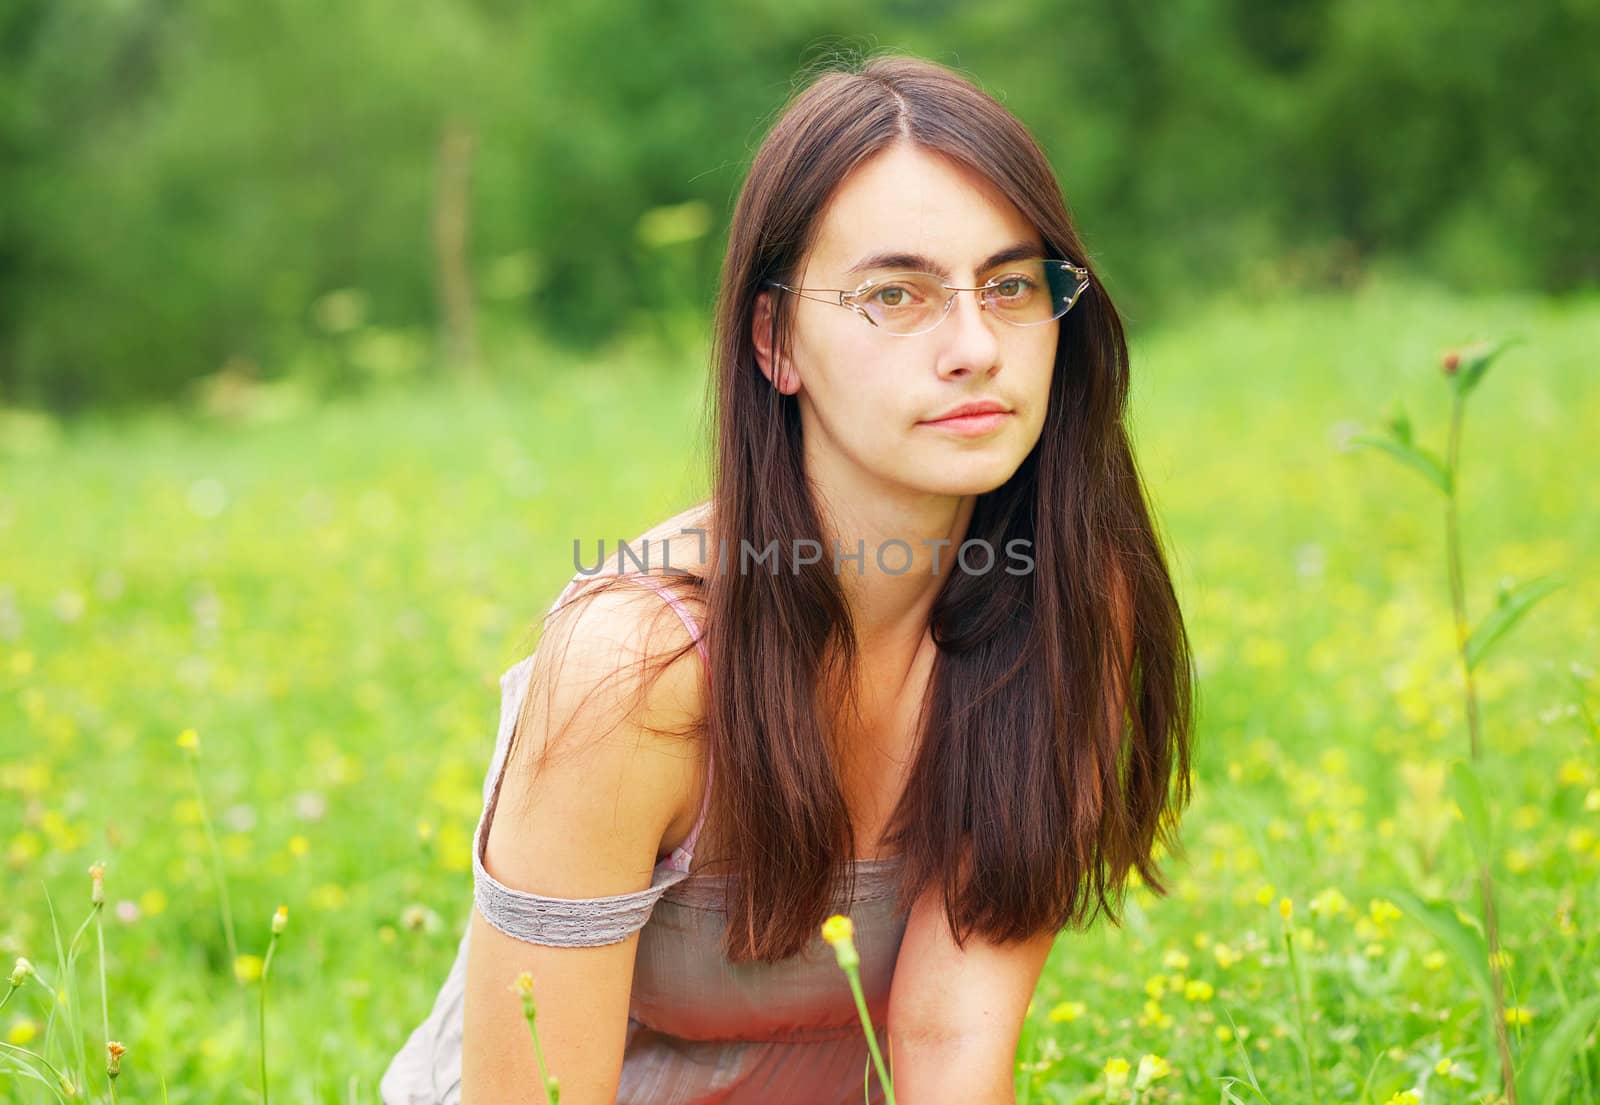 Portrait of a woman. She is sitting in a green meadow